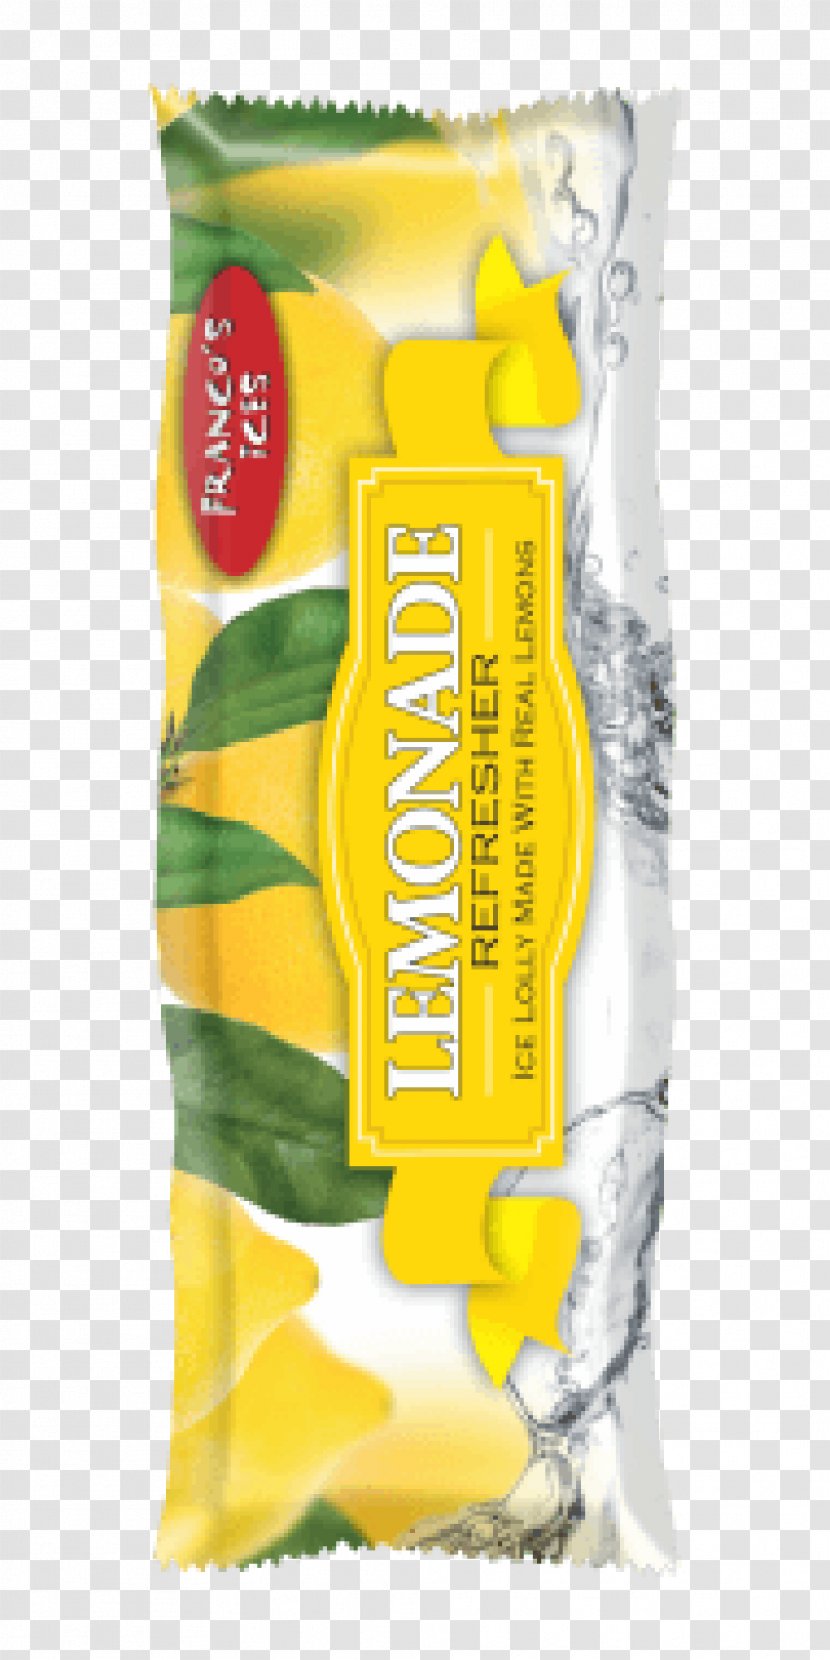 Ice Pop Junk Food Lemonade Franco Ices Ltd - Price Transparent PNG